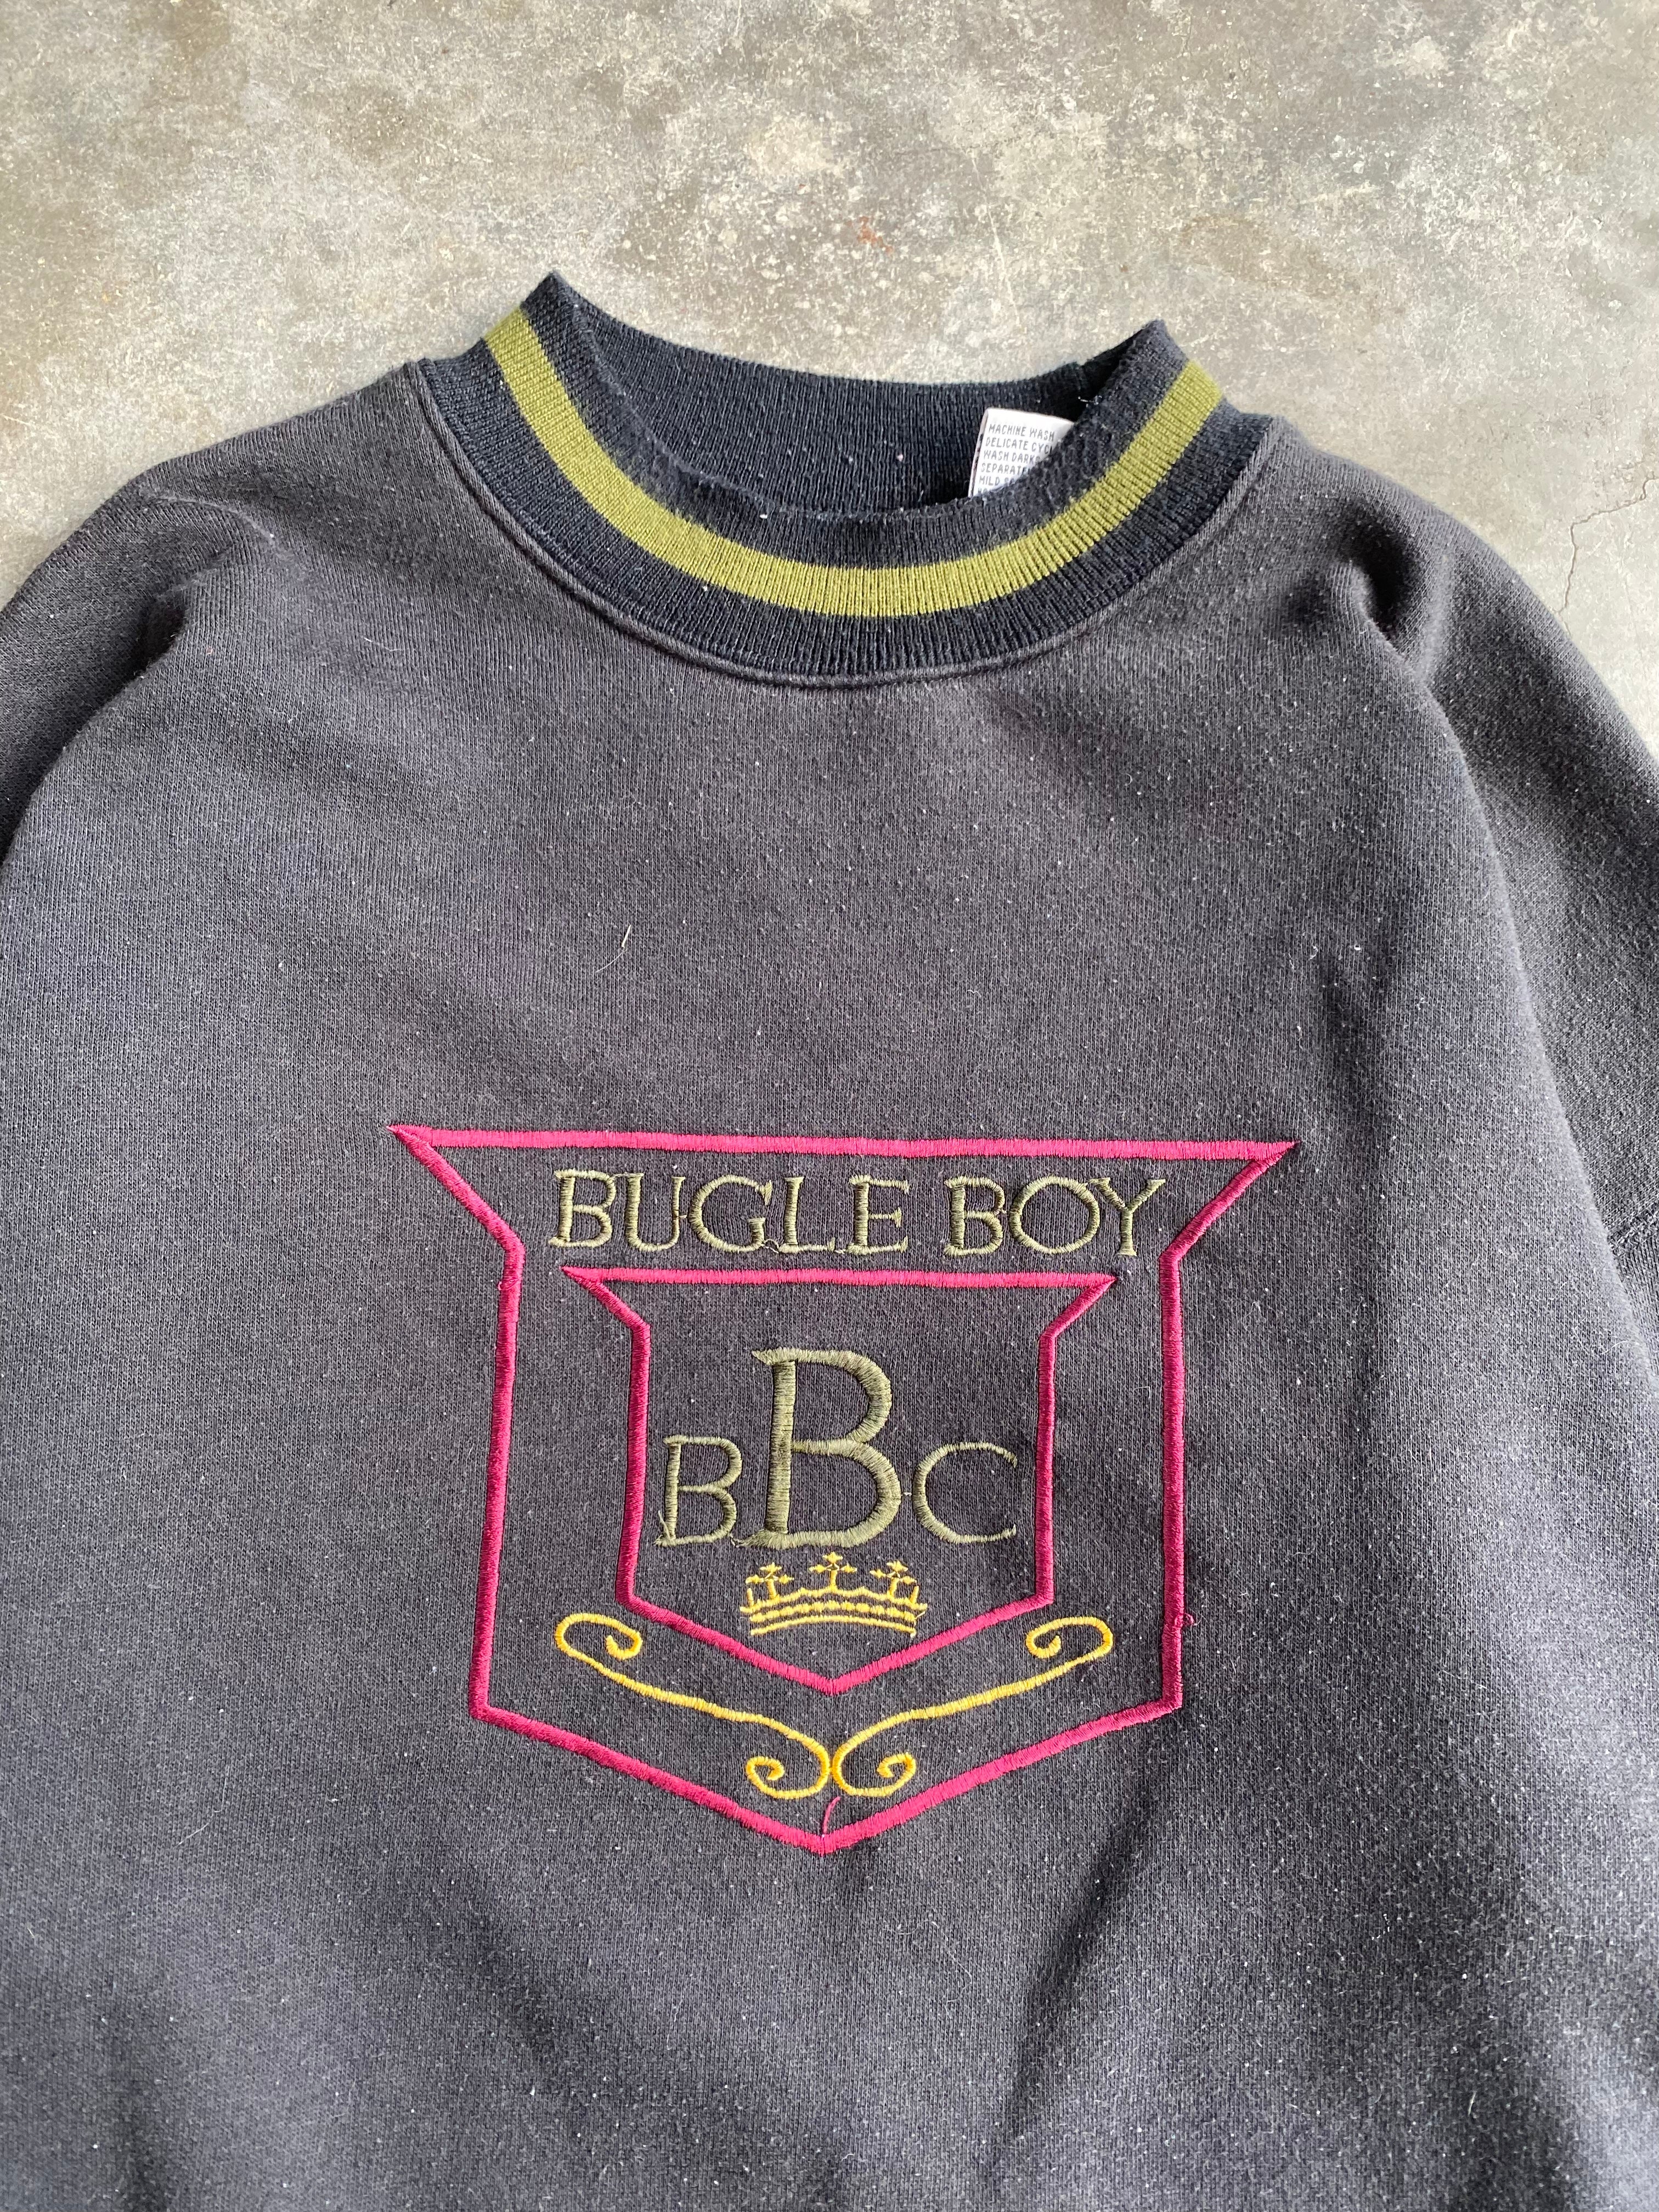 Vintage Bugle Boy Sweatshirt - L – Thrift Sh!t Vintage